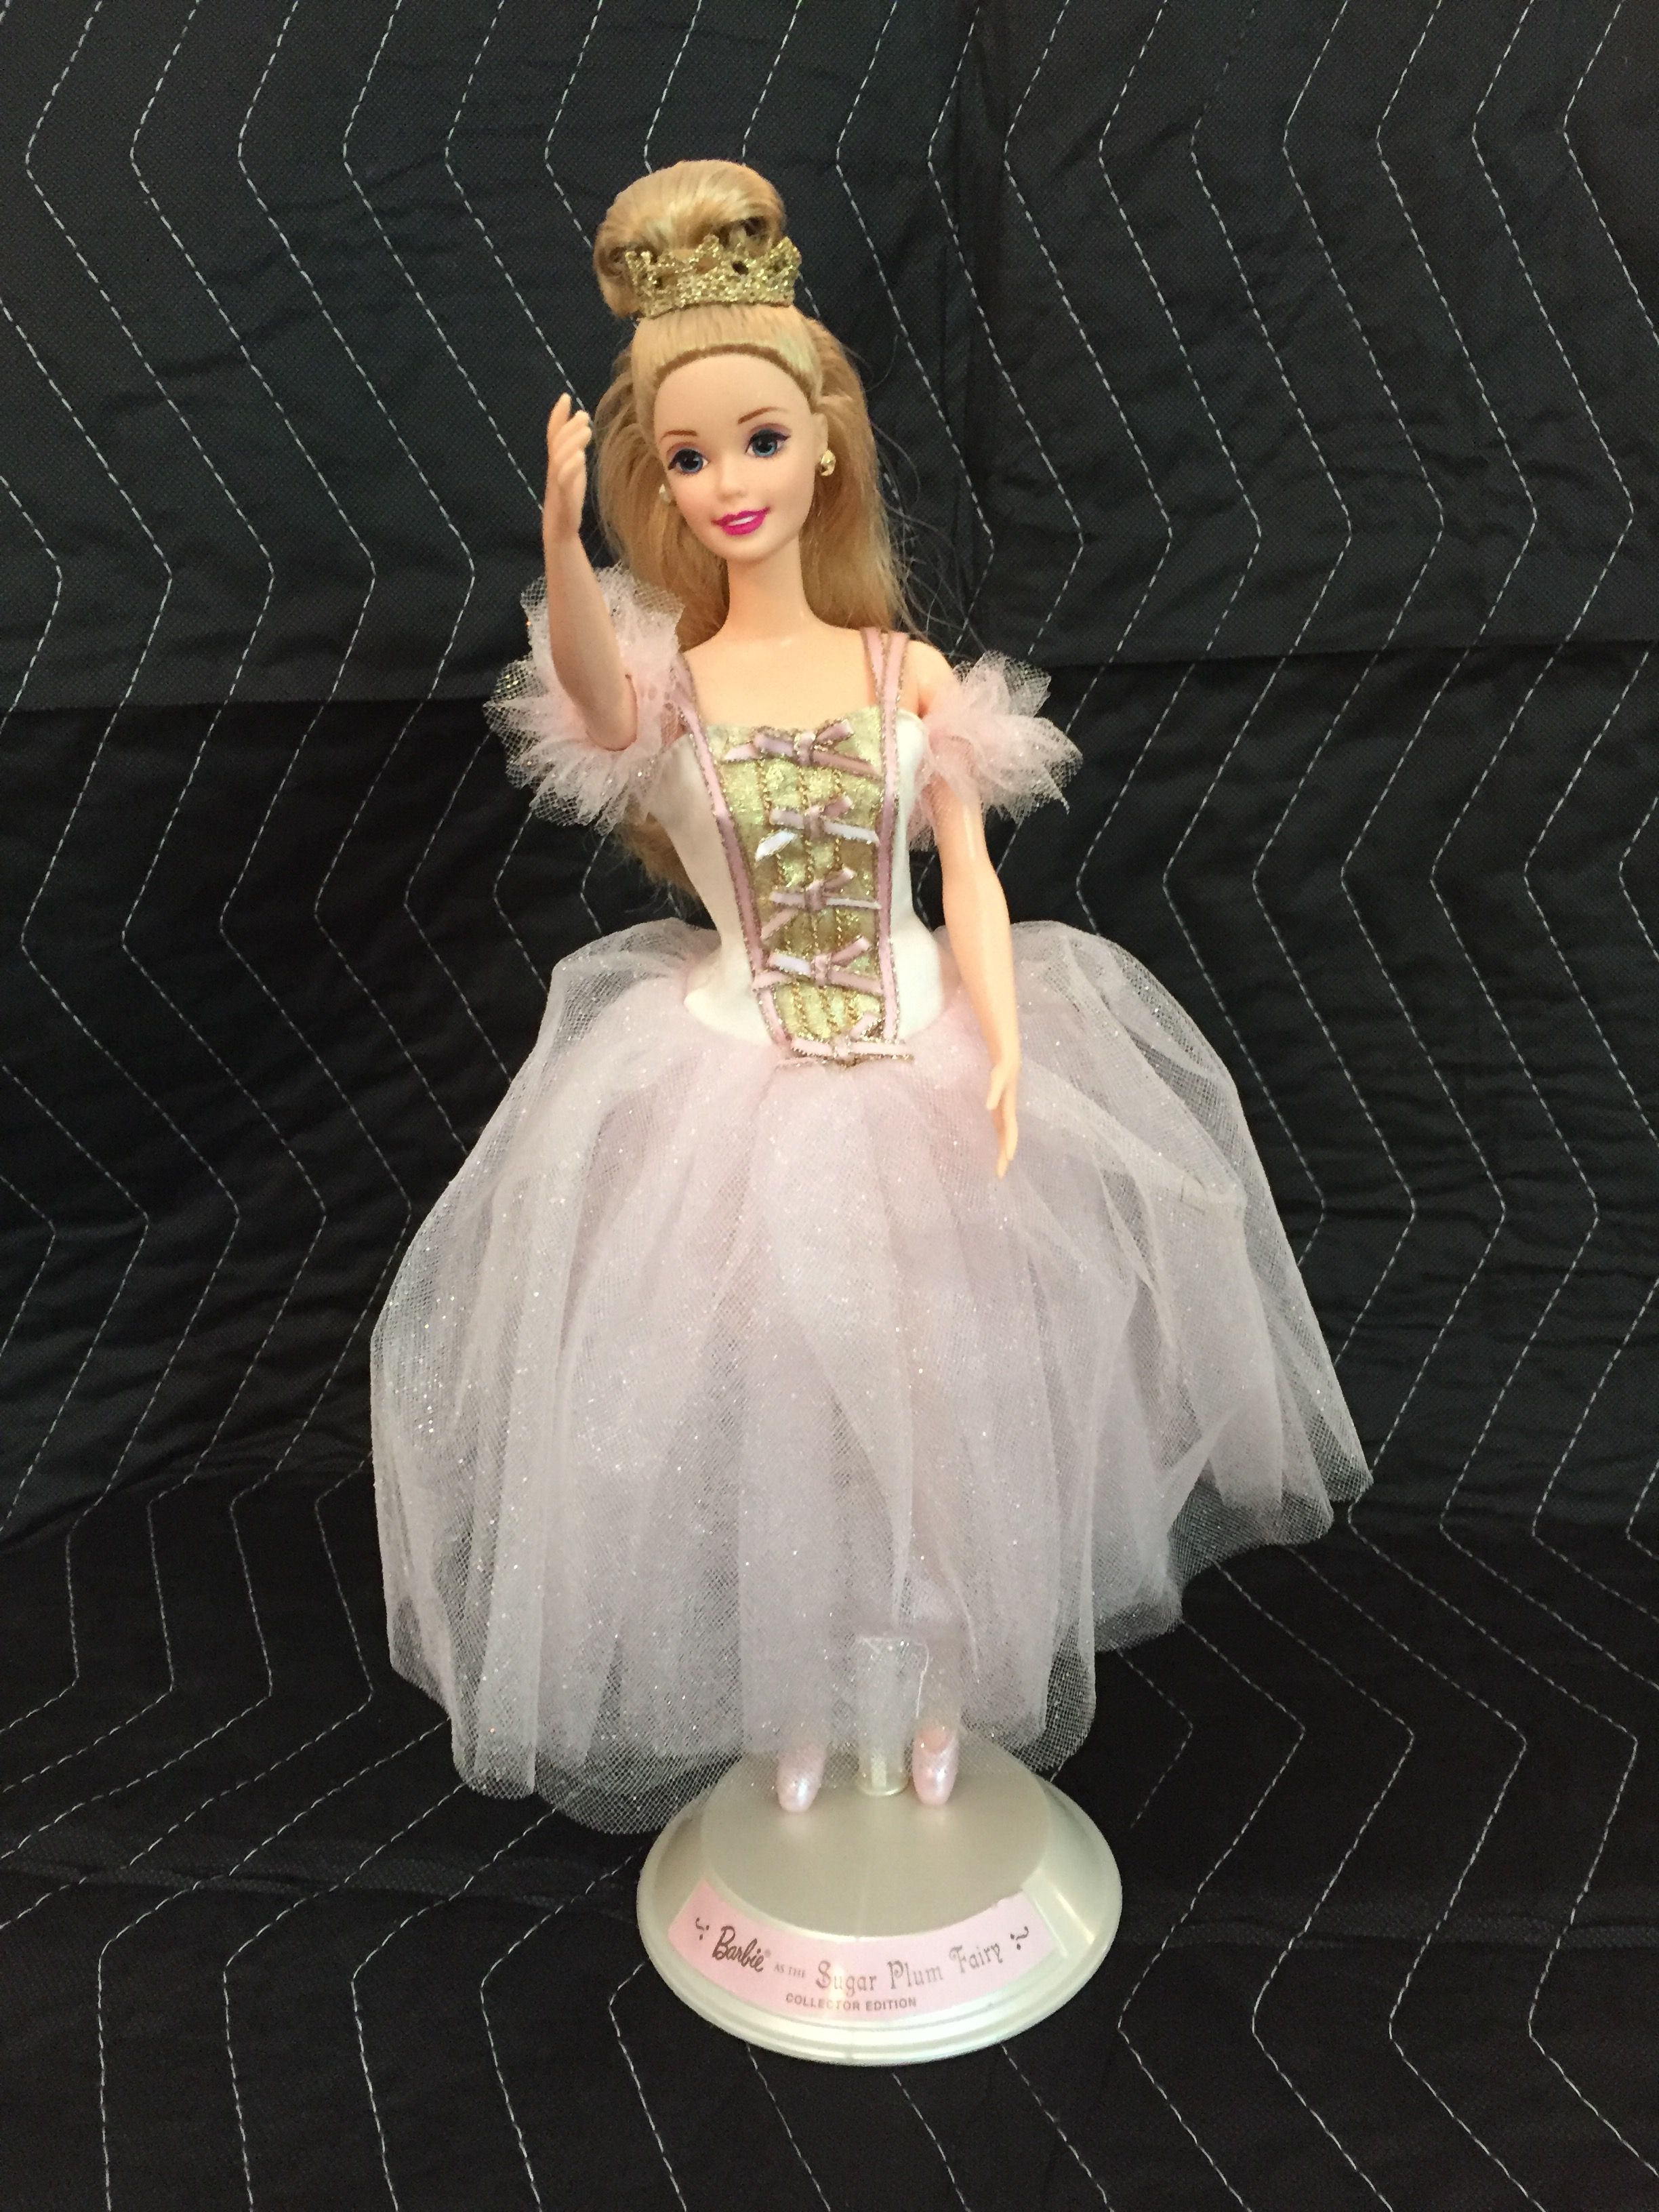 Barbie Sugar Plum Fairy for Sale in San Diego, CA - OfferUp